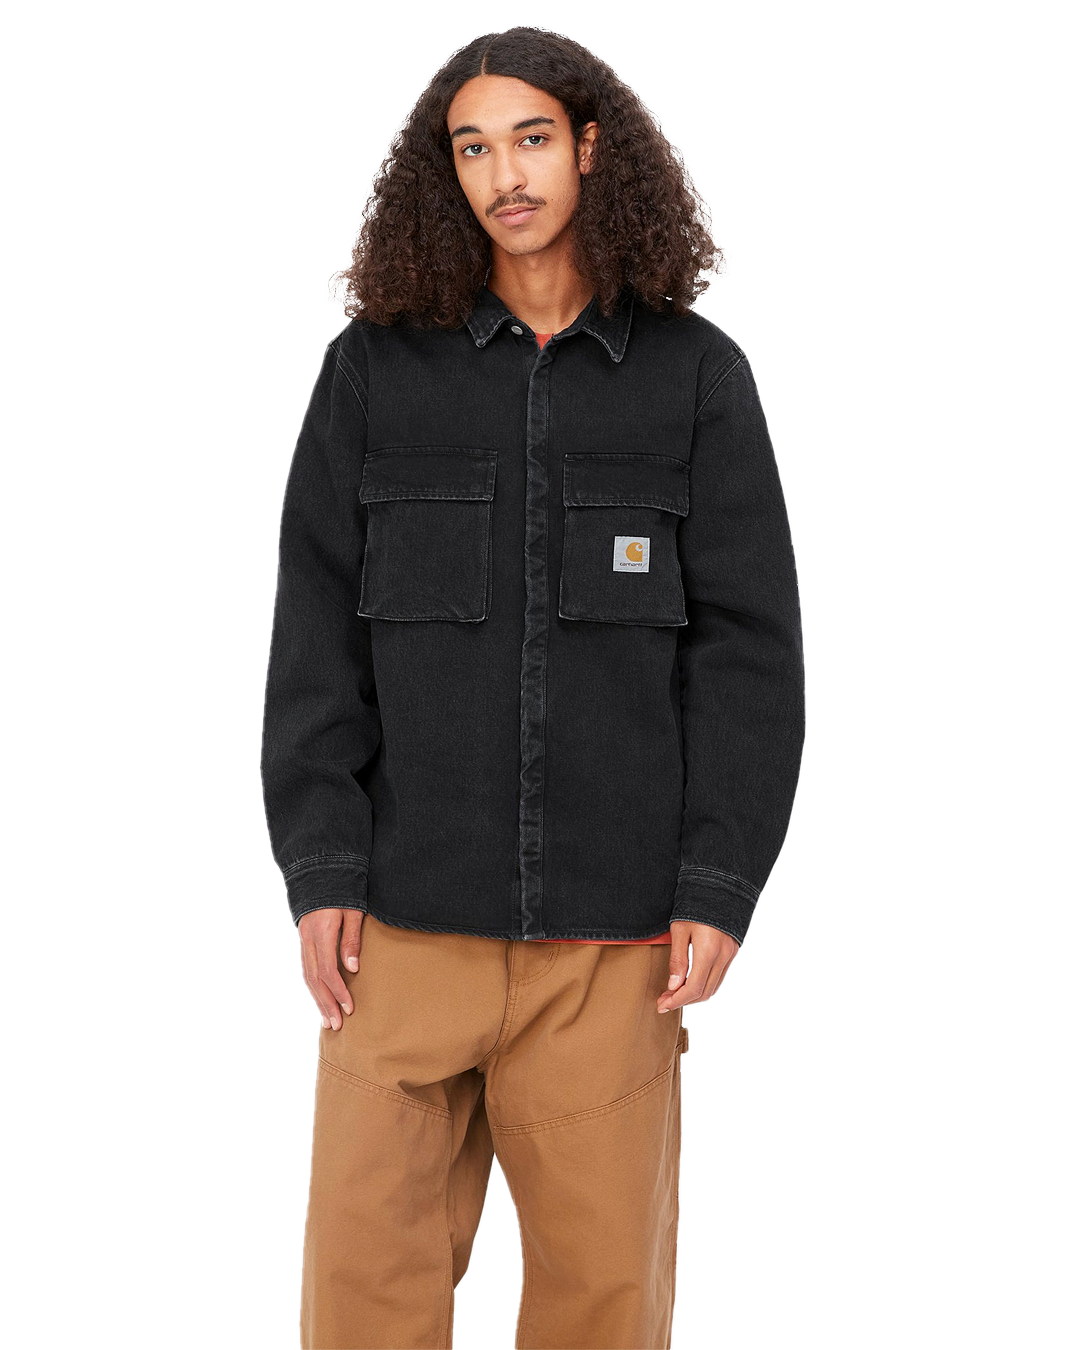 JF20,carhartt smith jacket,cheap online